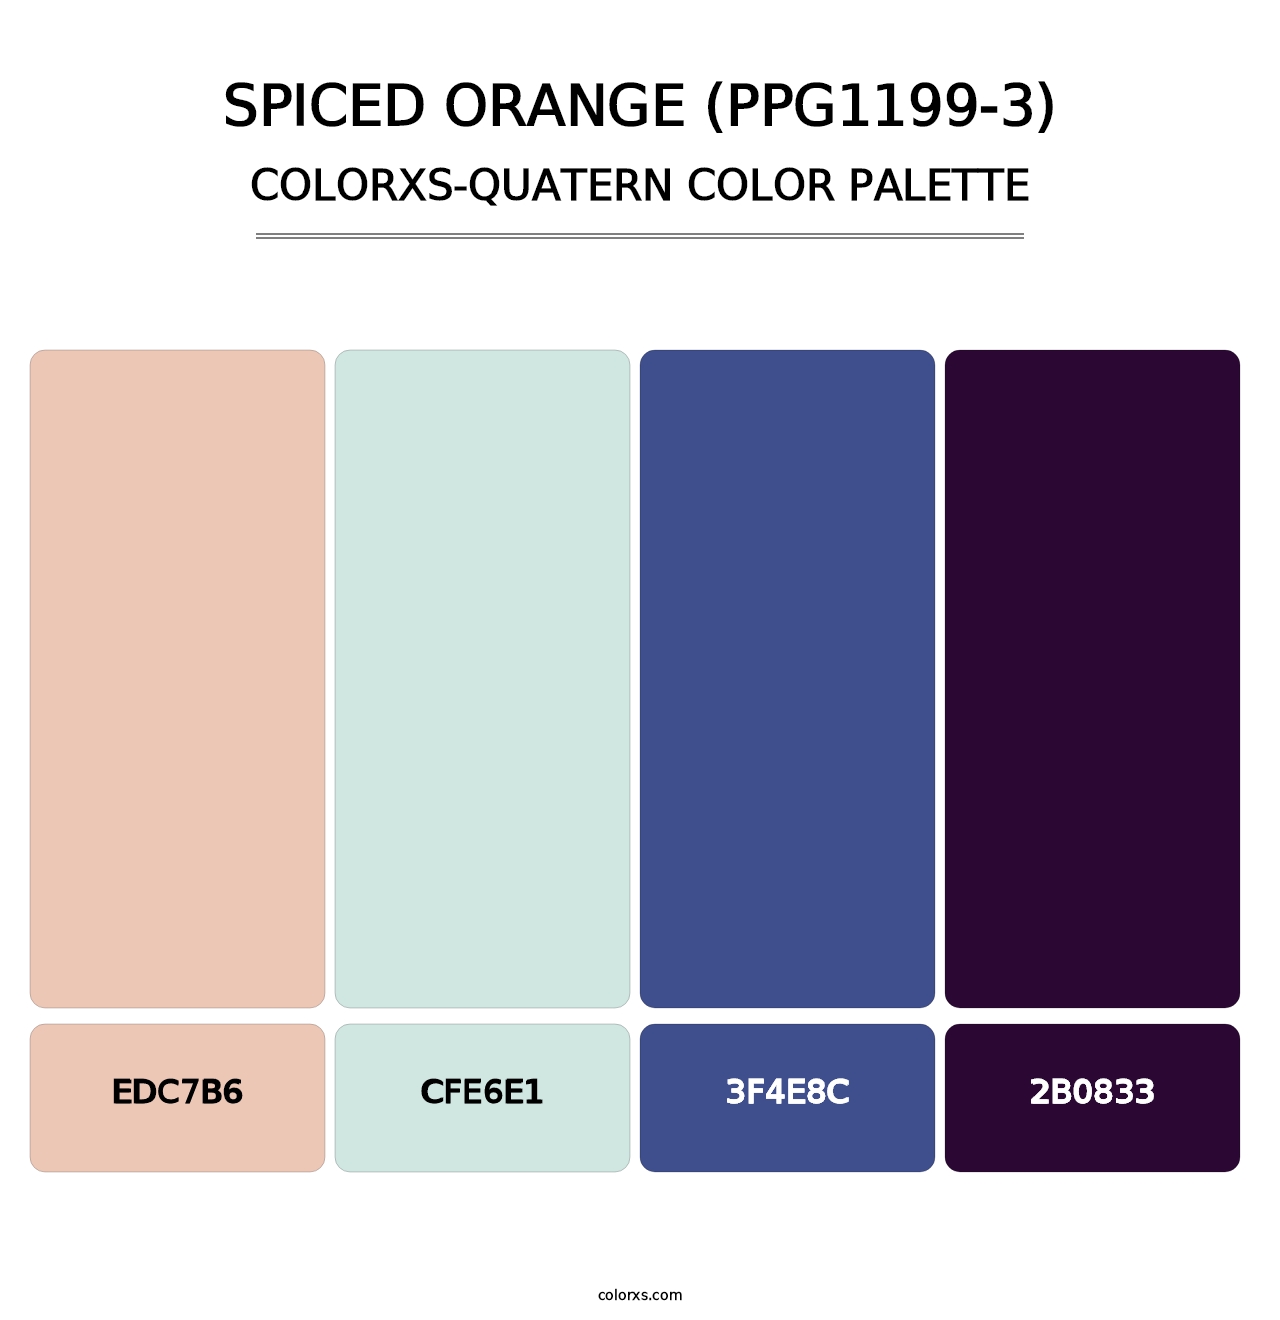 Spiced Orange (PPG1199-3) - Colorxs Quatern Palette